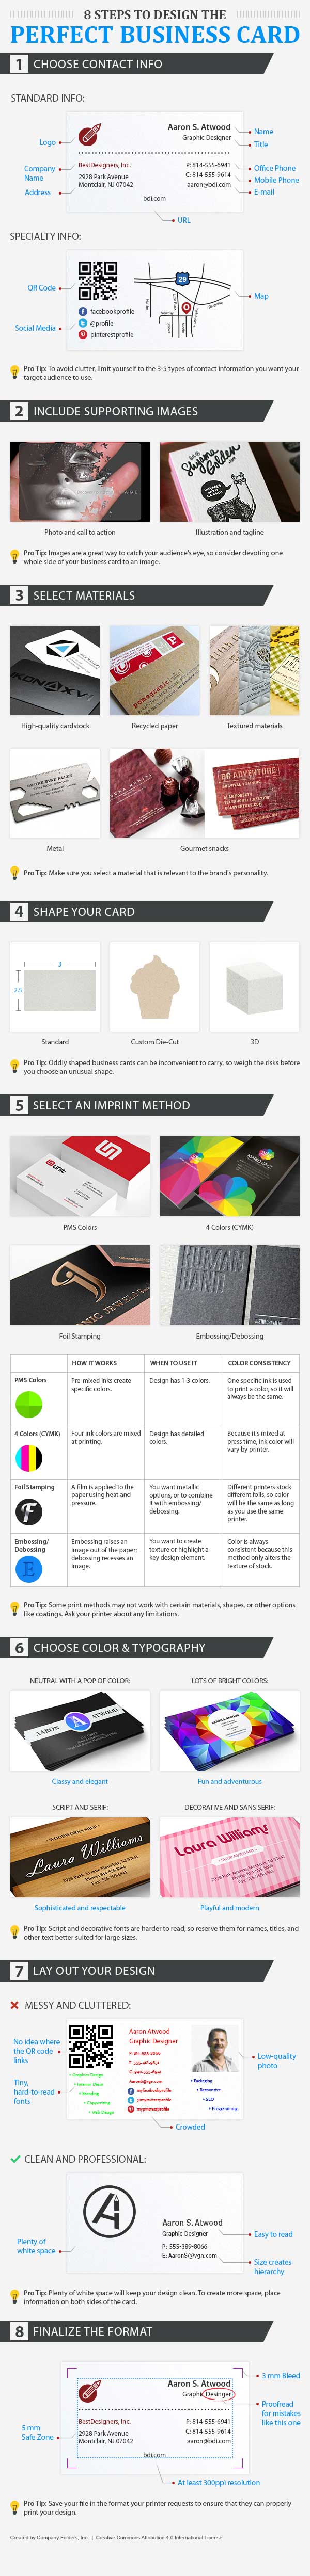 Business-Card-Design-Tips